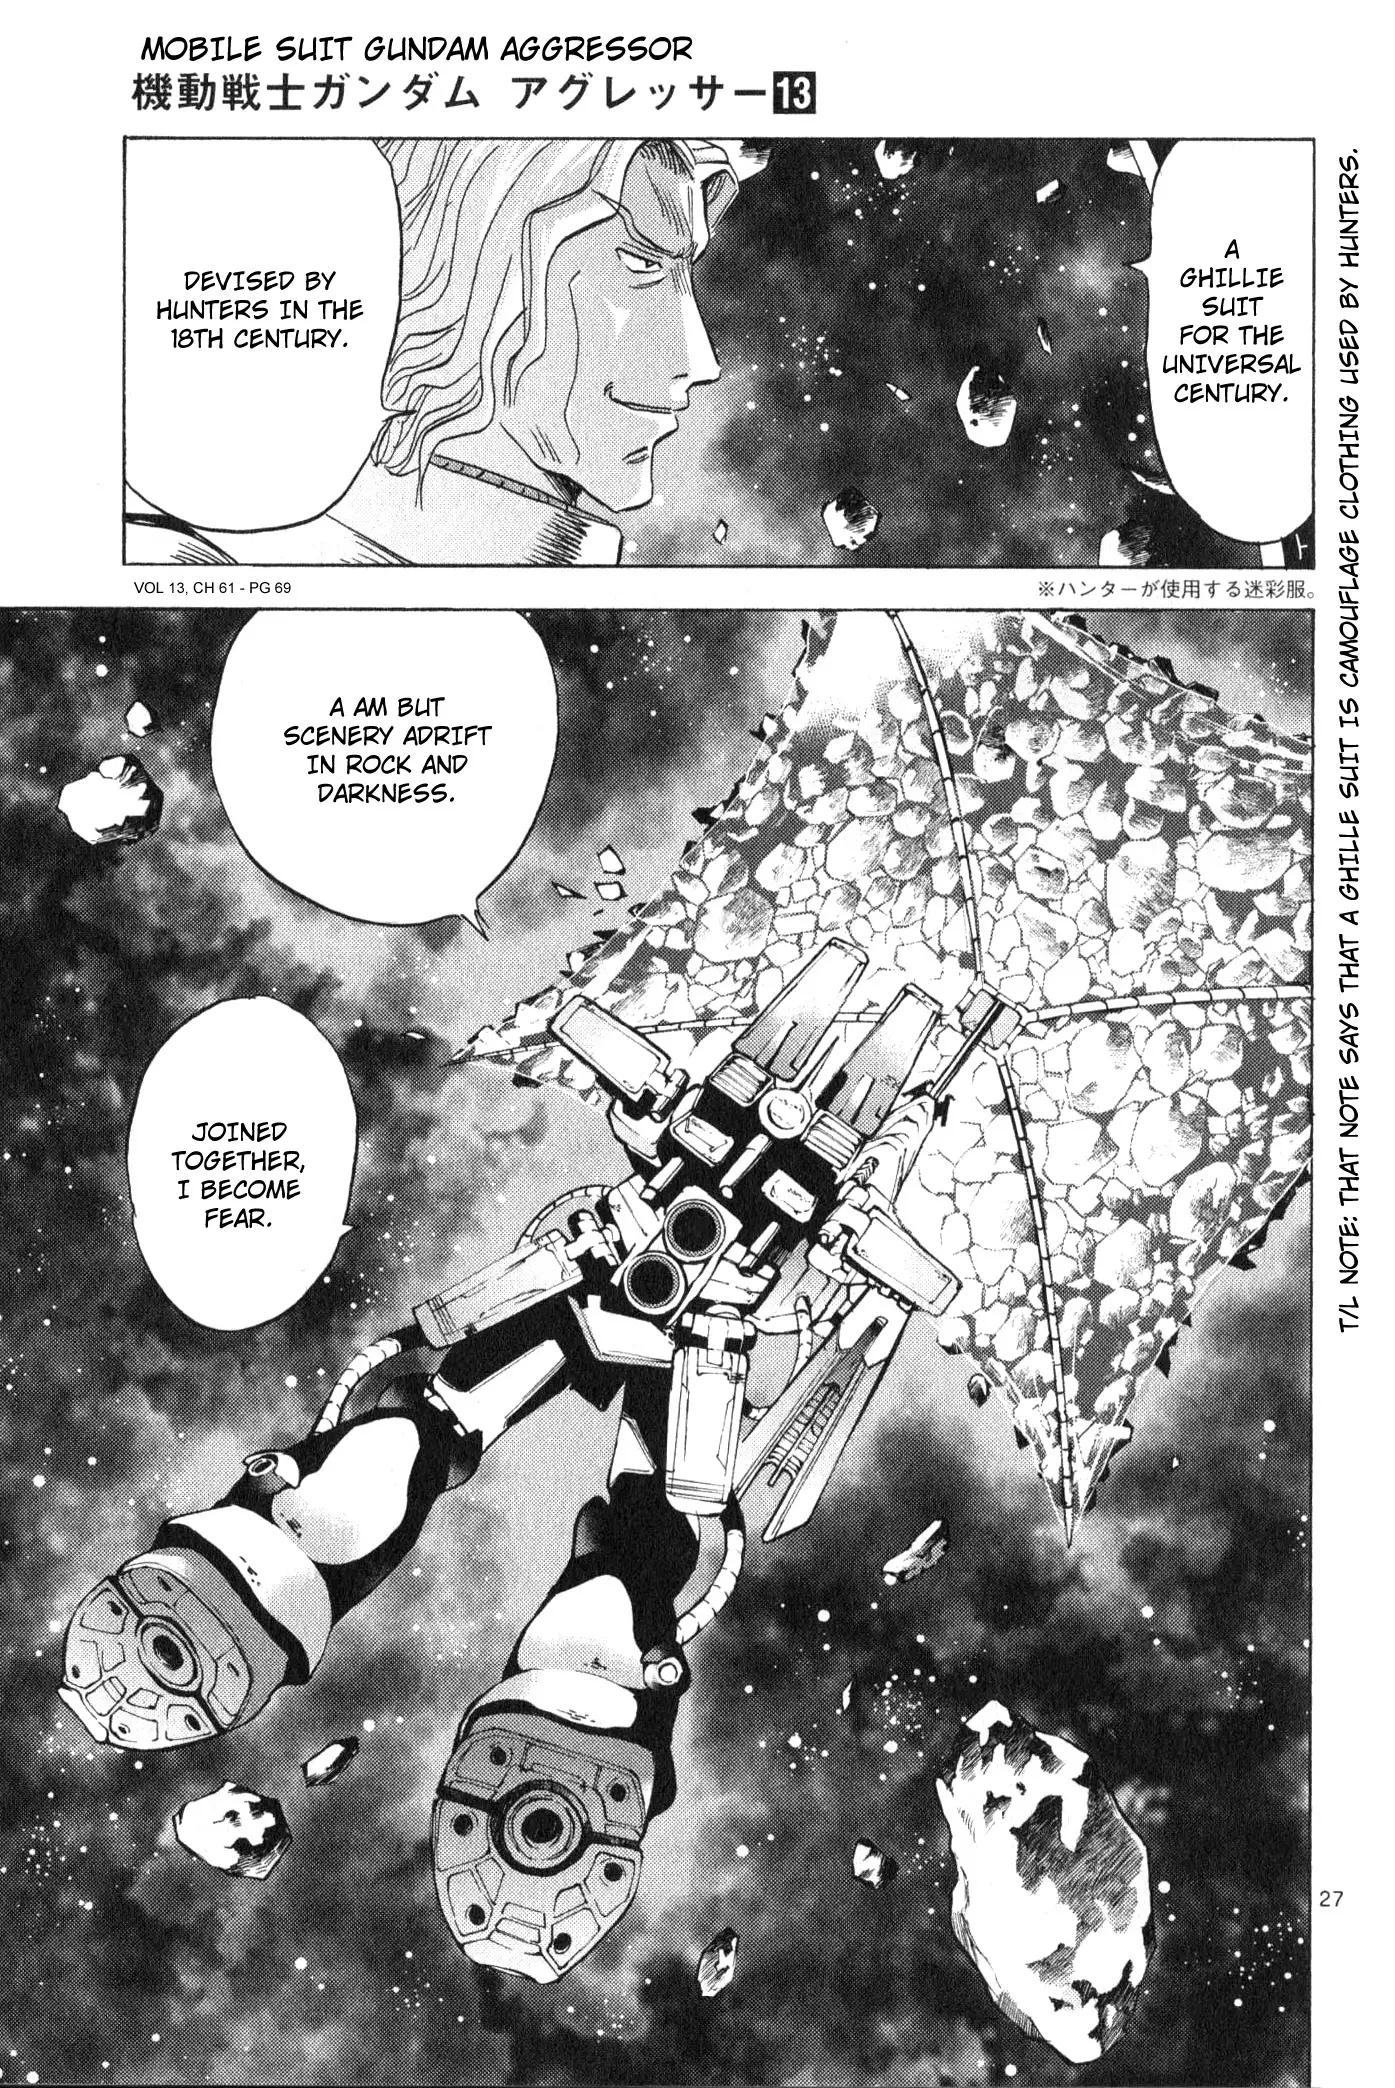 Mobile Suit Gundam Aggressor - 61 page 27-ca881efc